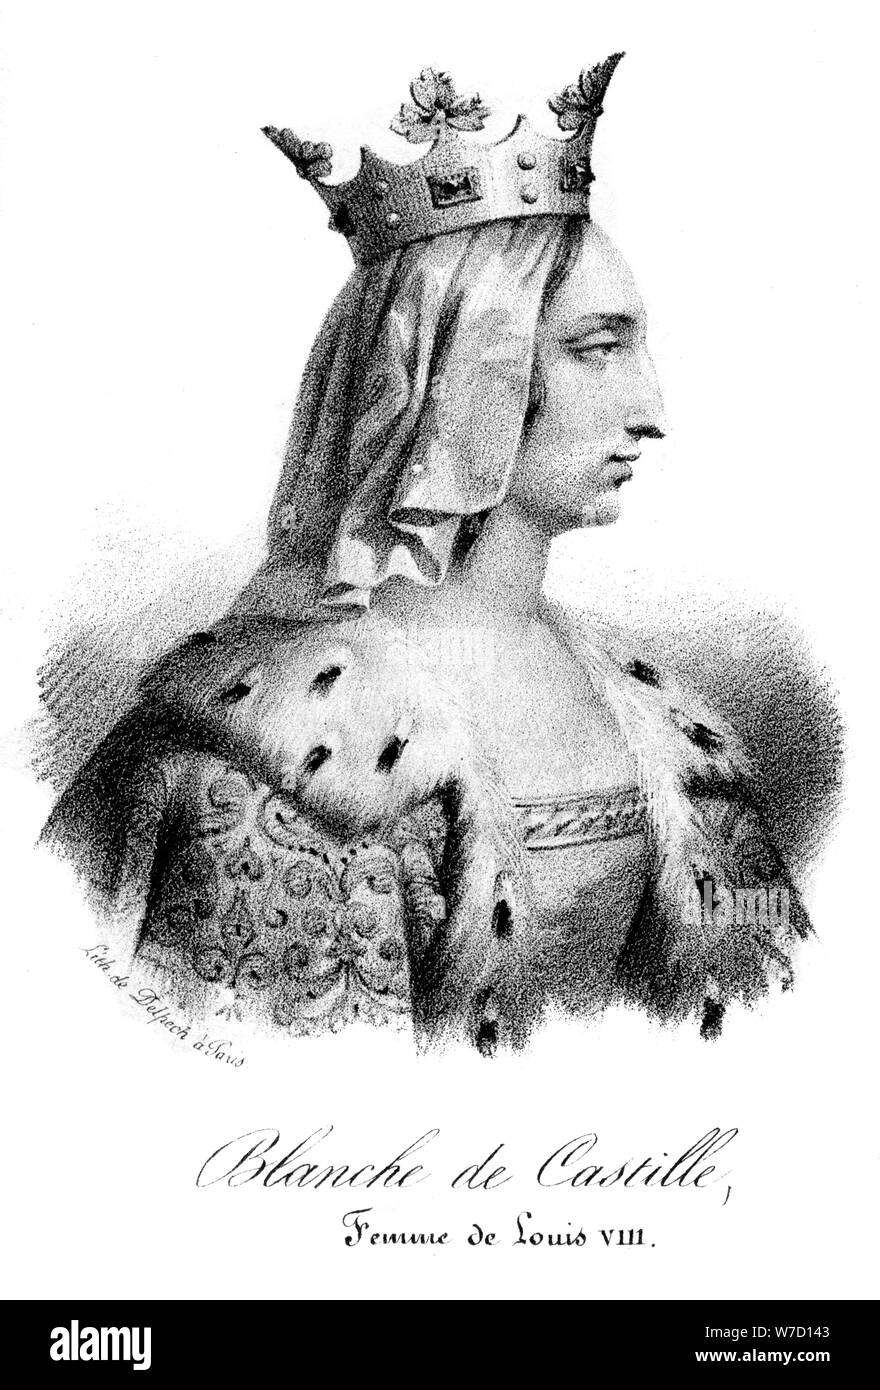 Blanca de Castilla, esposa de Luis VIII de Francia, (siglo xix).Artista: Delpech Foto de stock